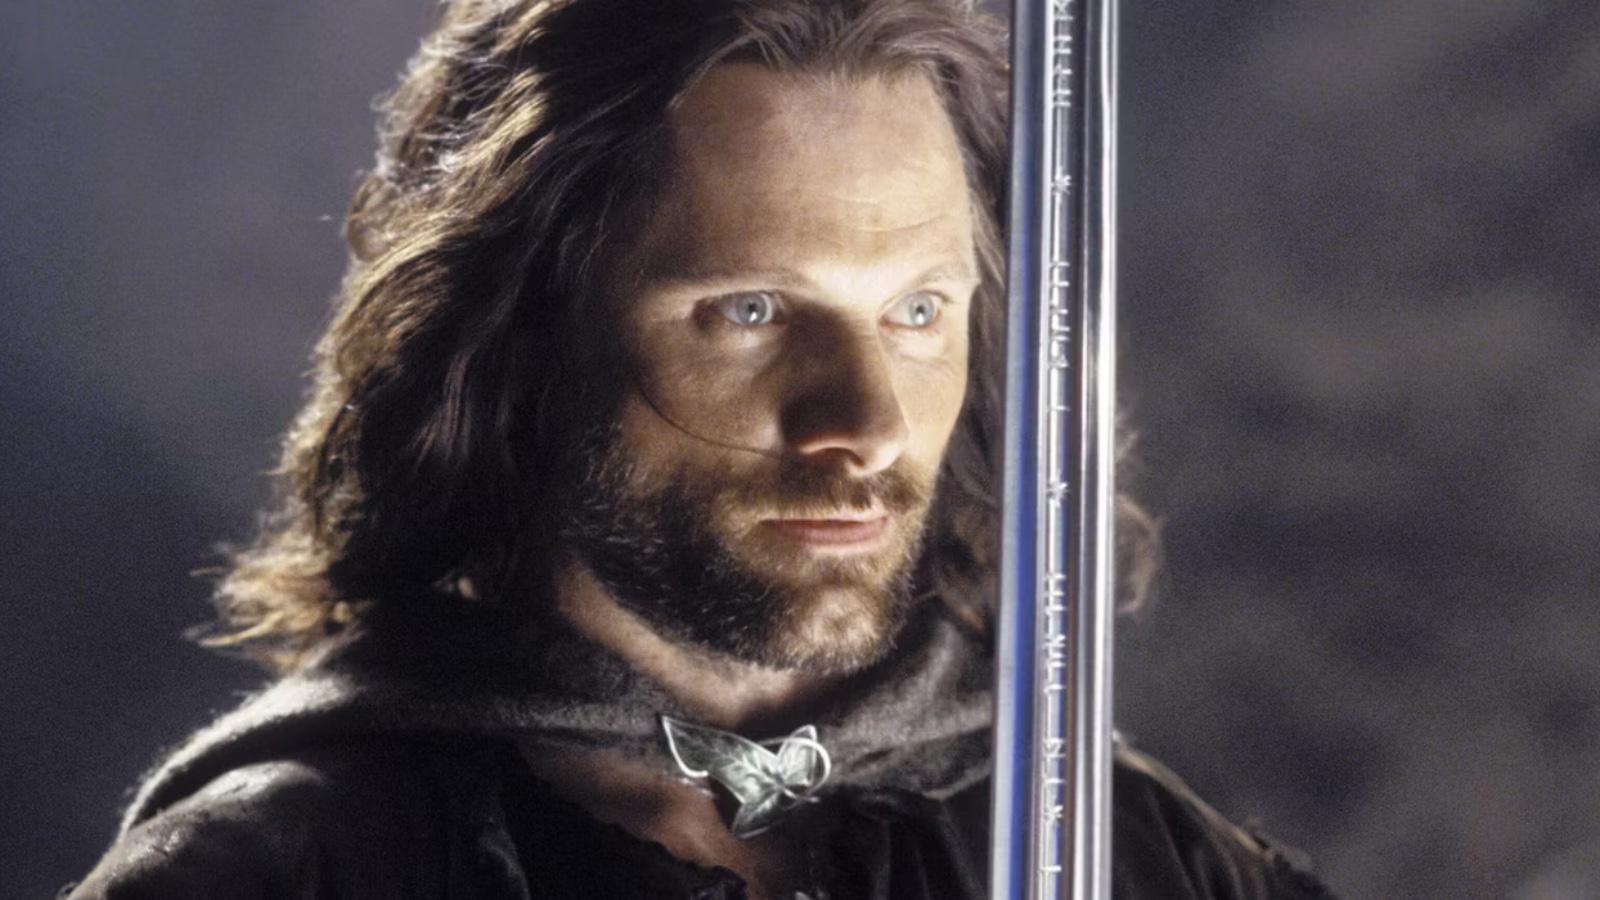 Viggo Mortensen as Aragorn in Lord of the Rings.